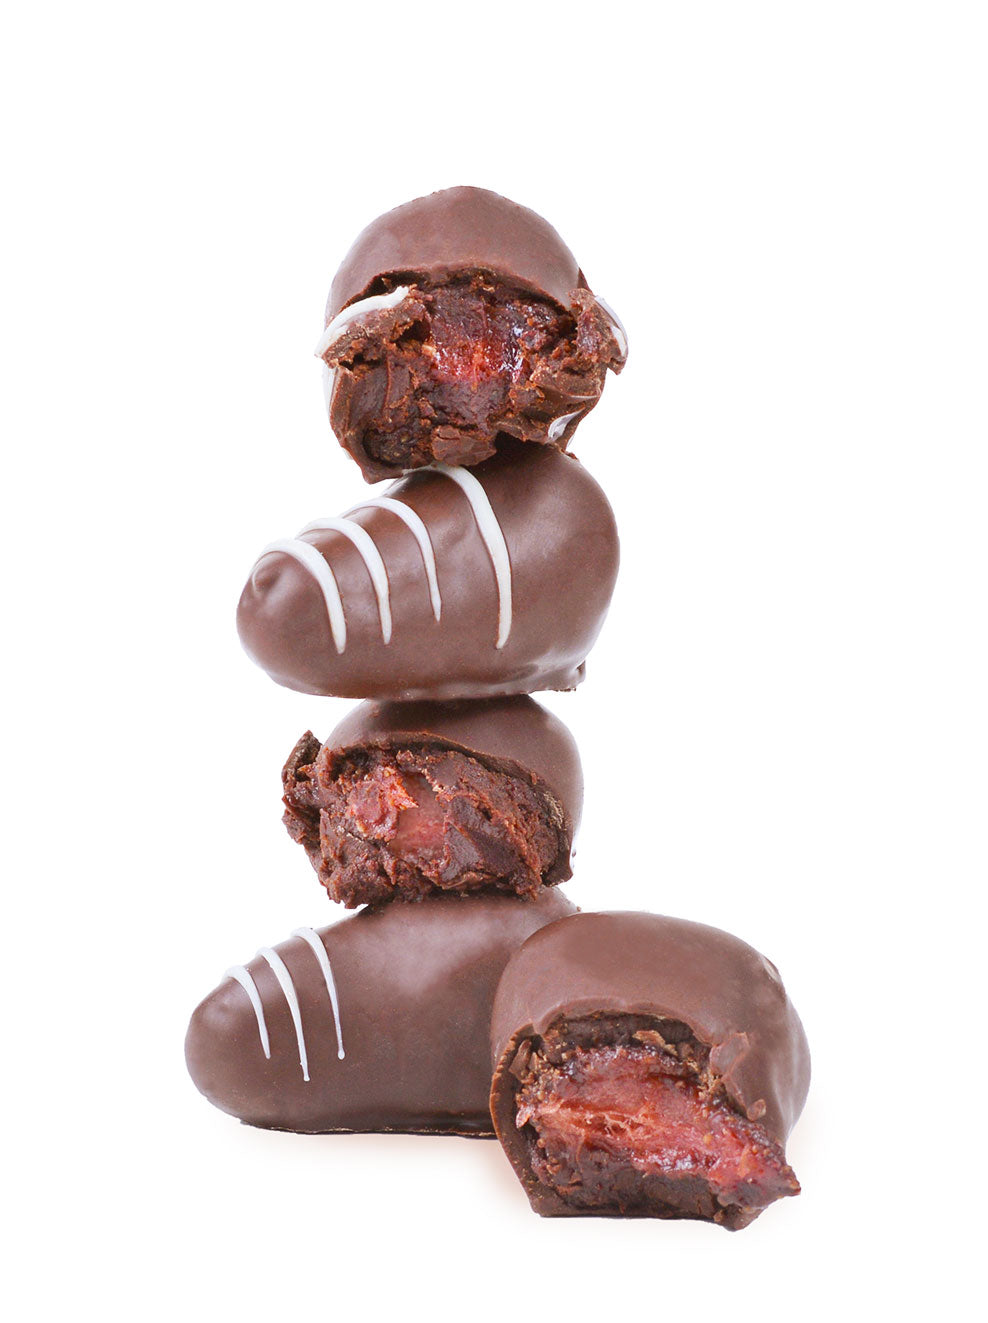 Milk Chocolate Bonbons – Chuao Chocolatier